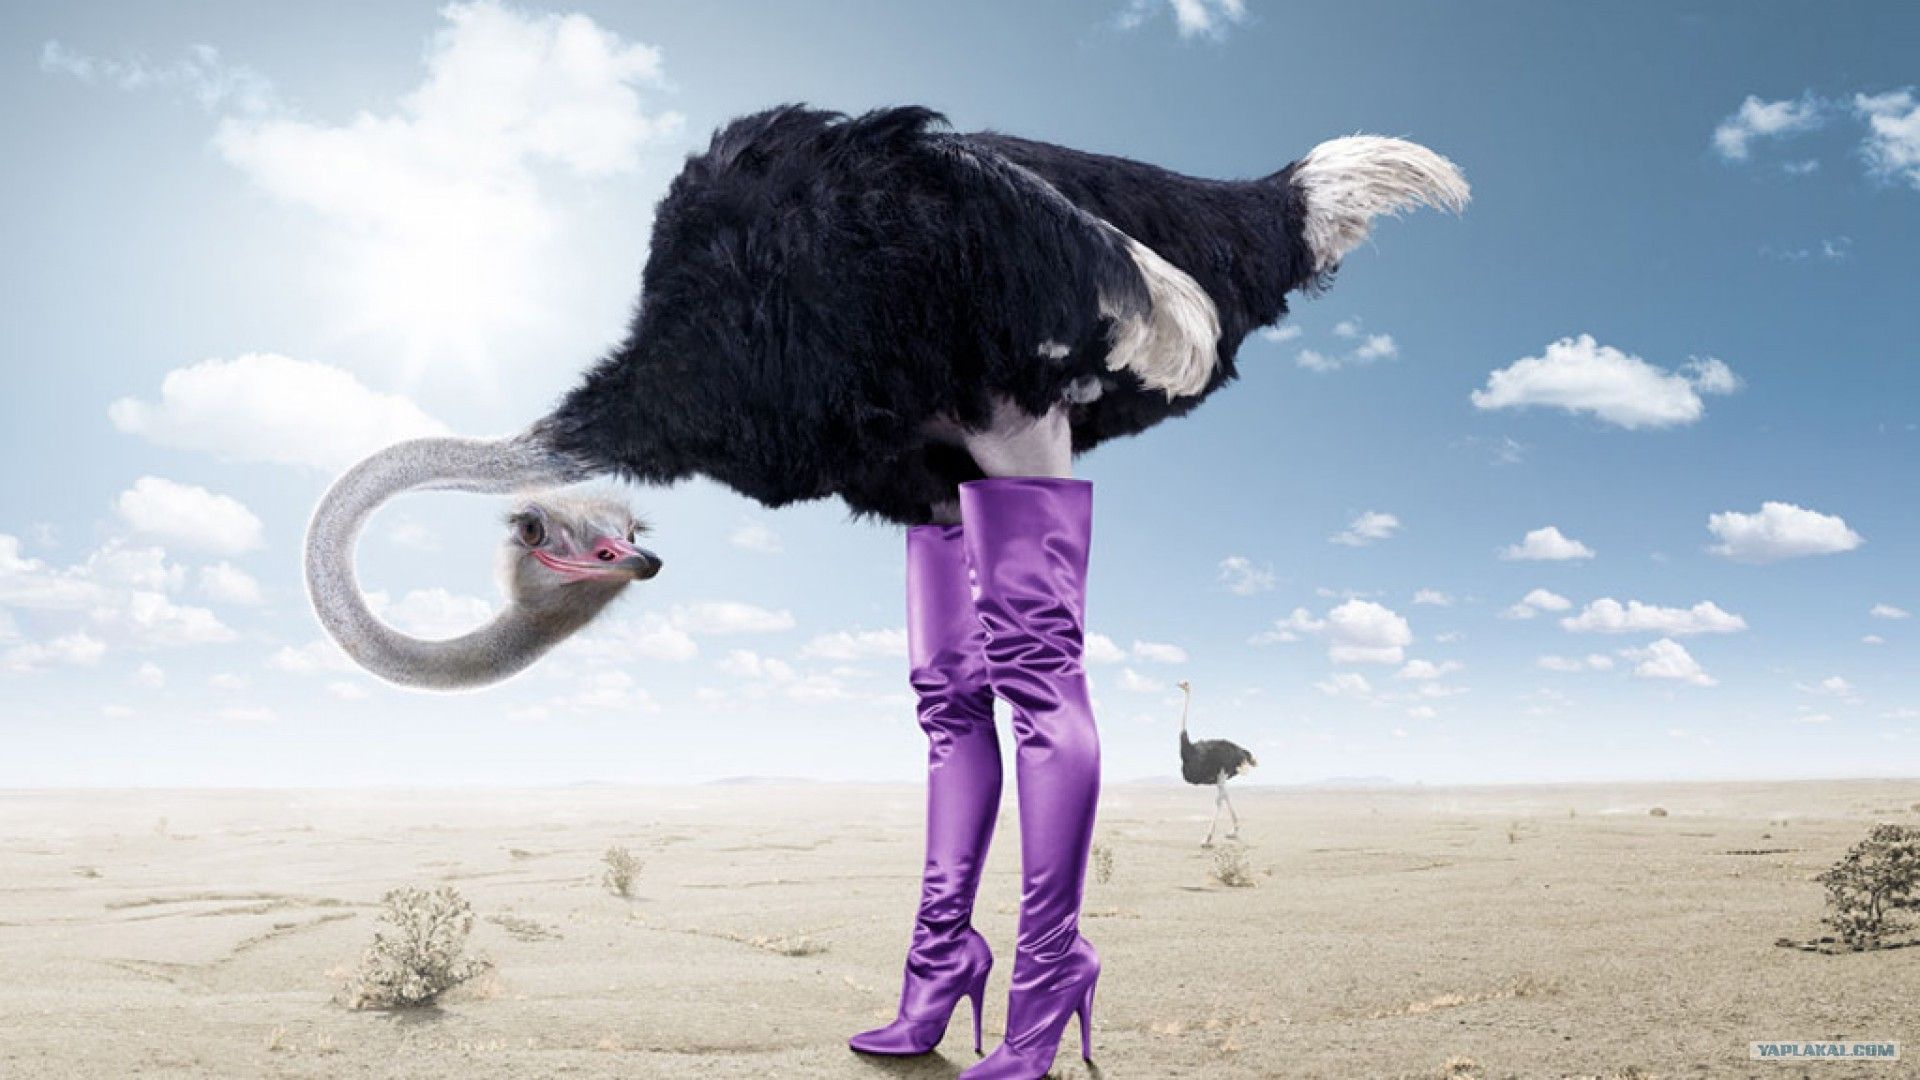 Ostrich download wallpaper image